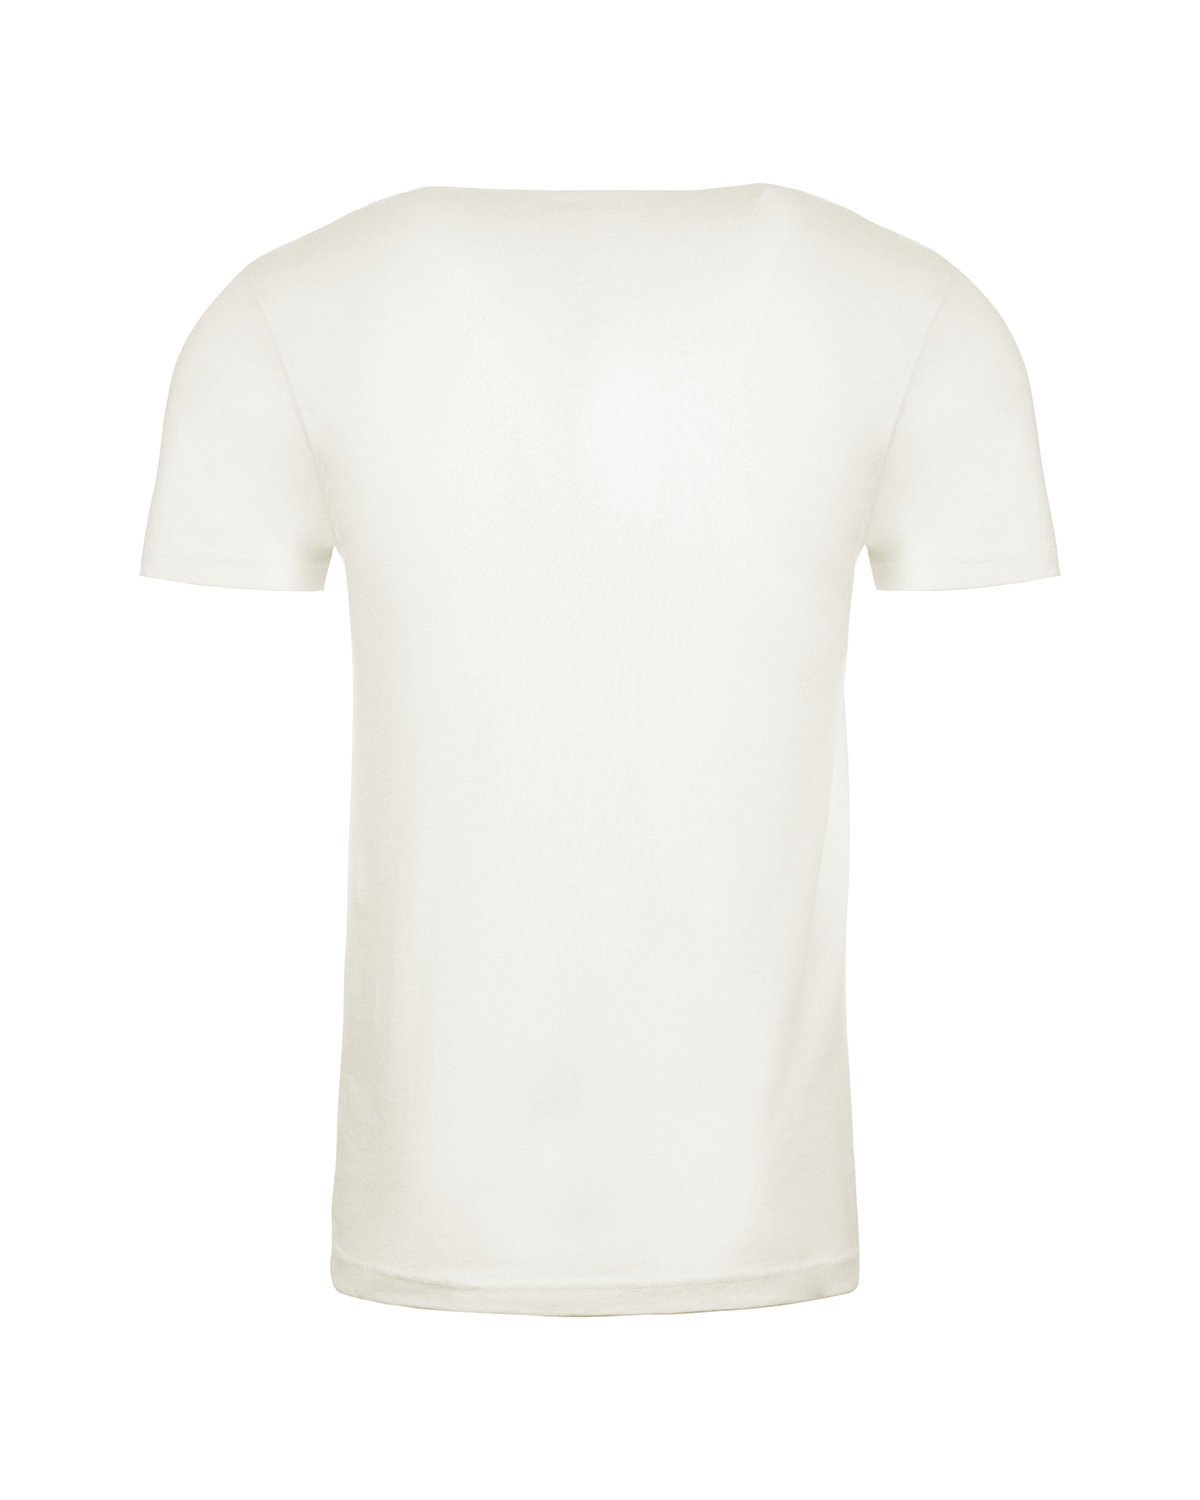 Next Level Apparel Unisex CVC Crewneck T-Shirt | alphabroder